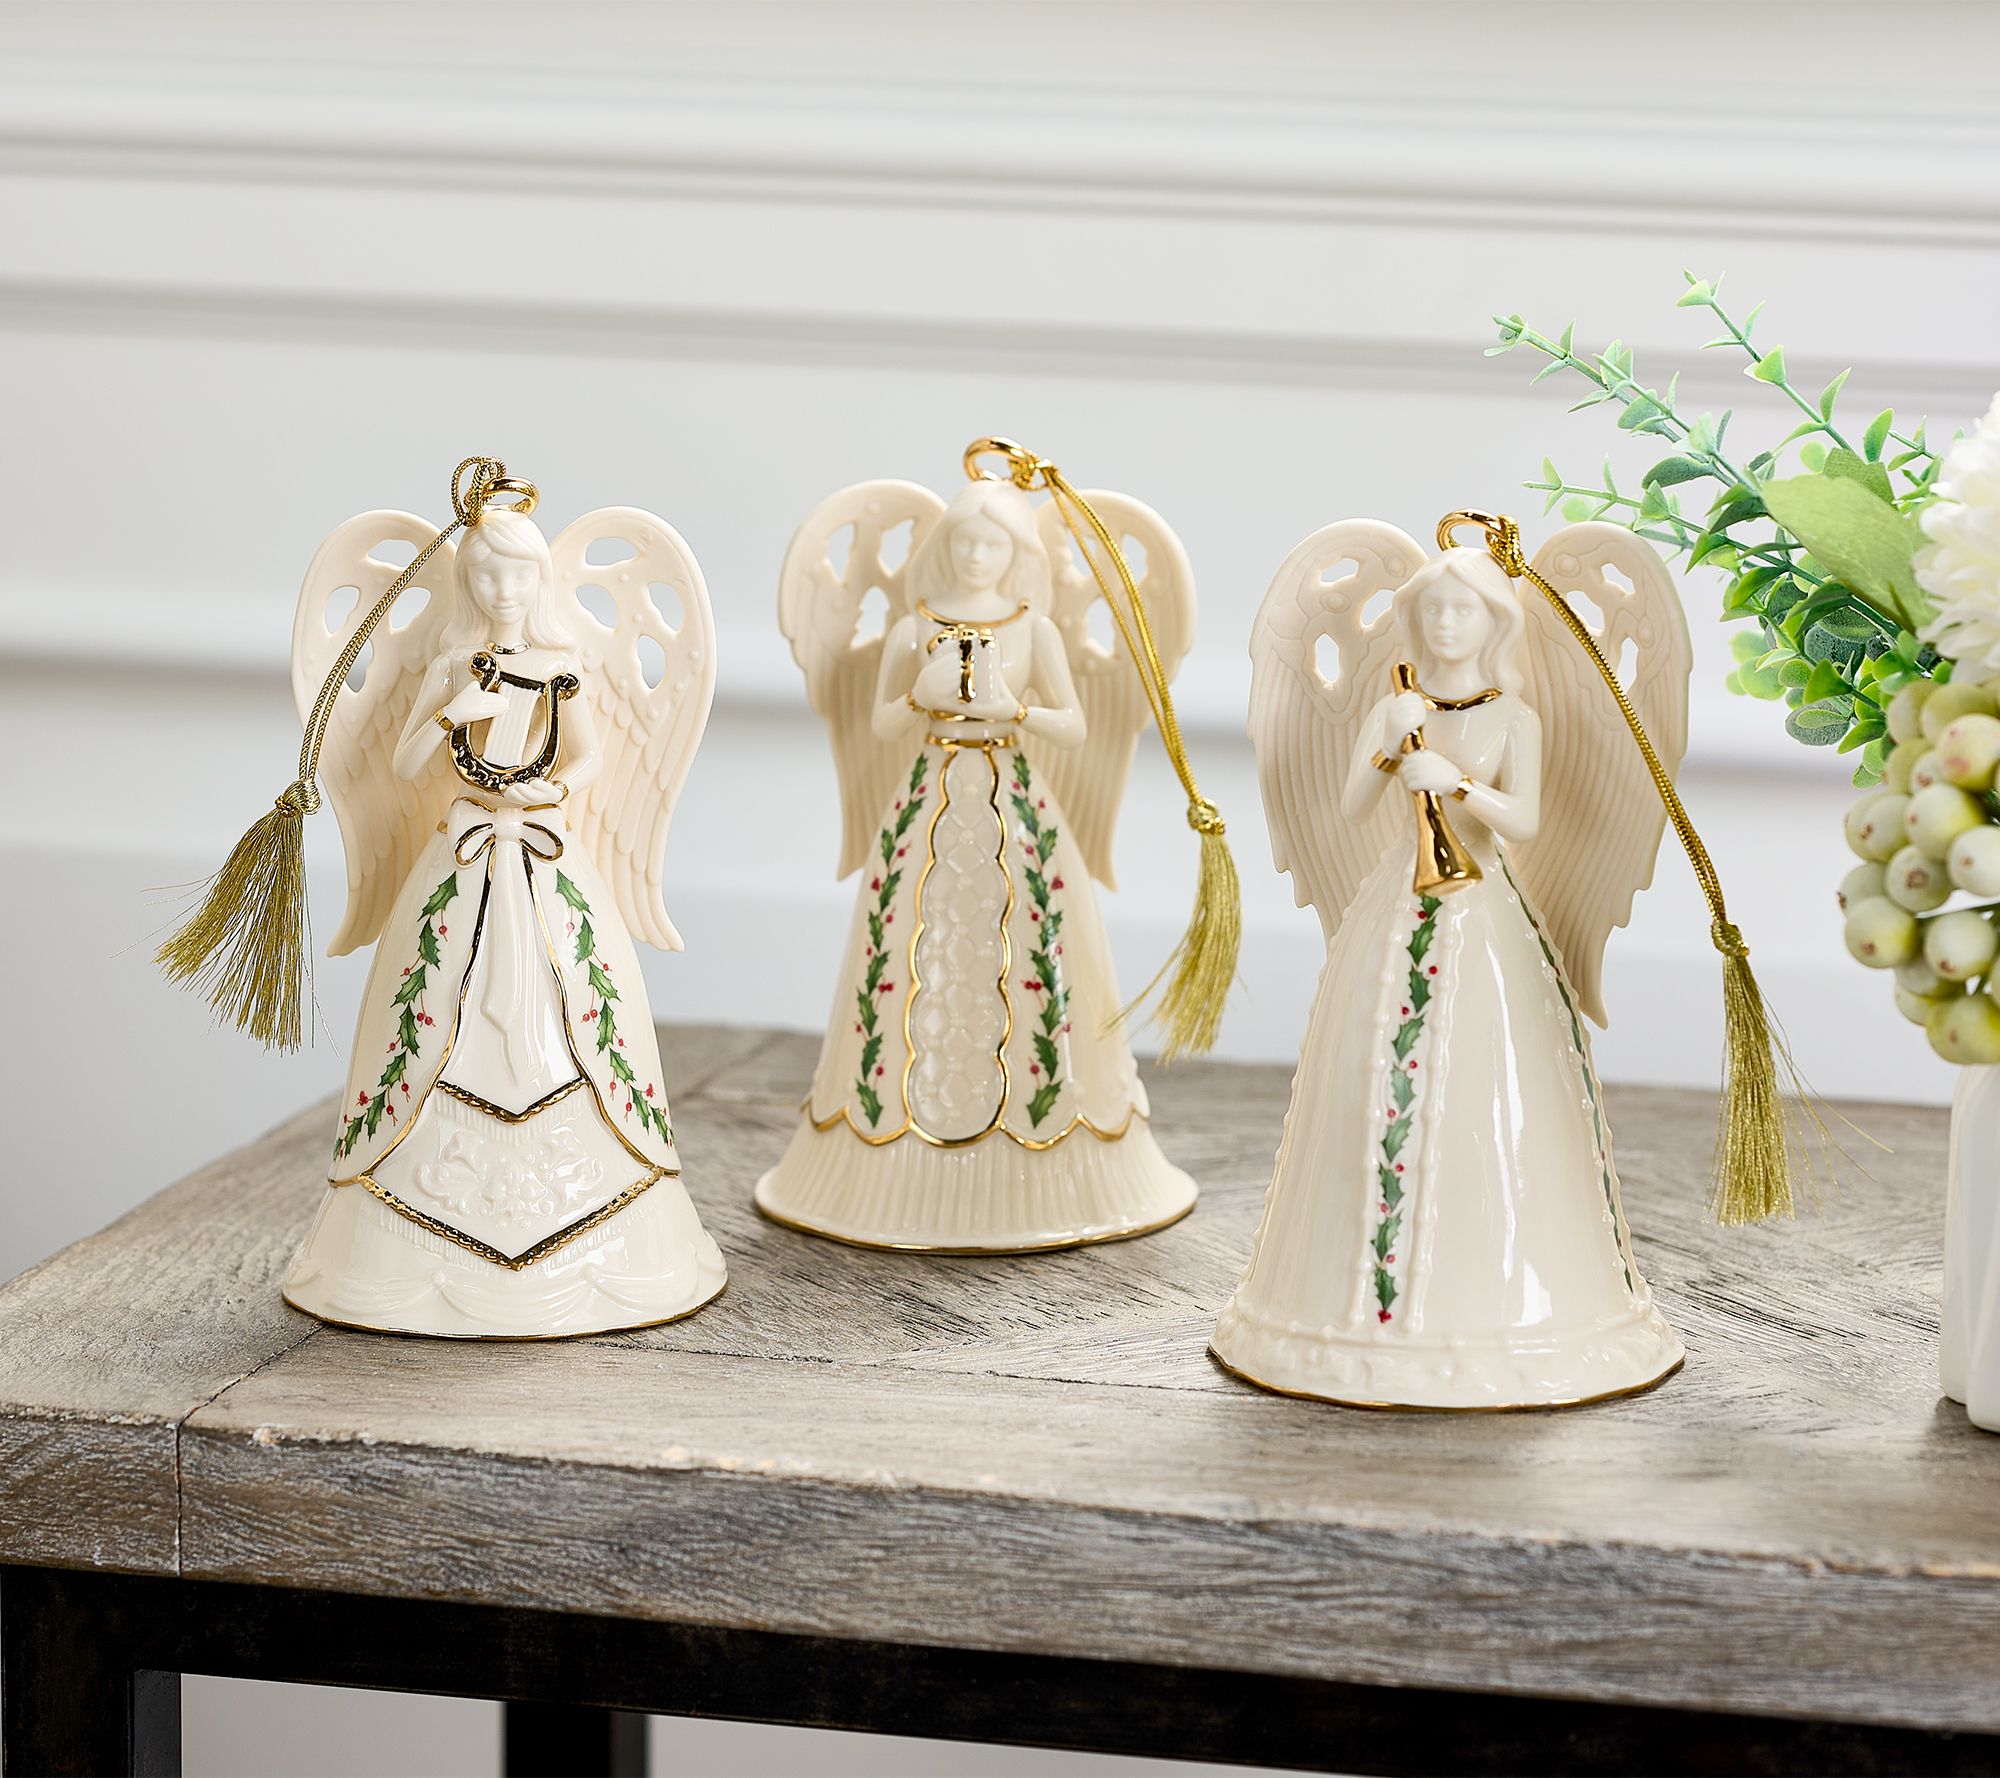 Charming Angel Bell Ornament Kit